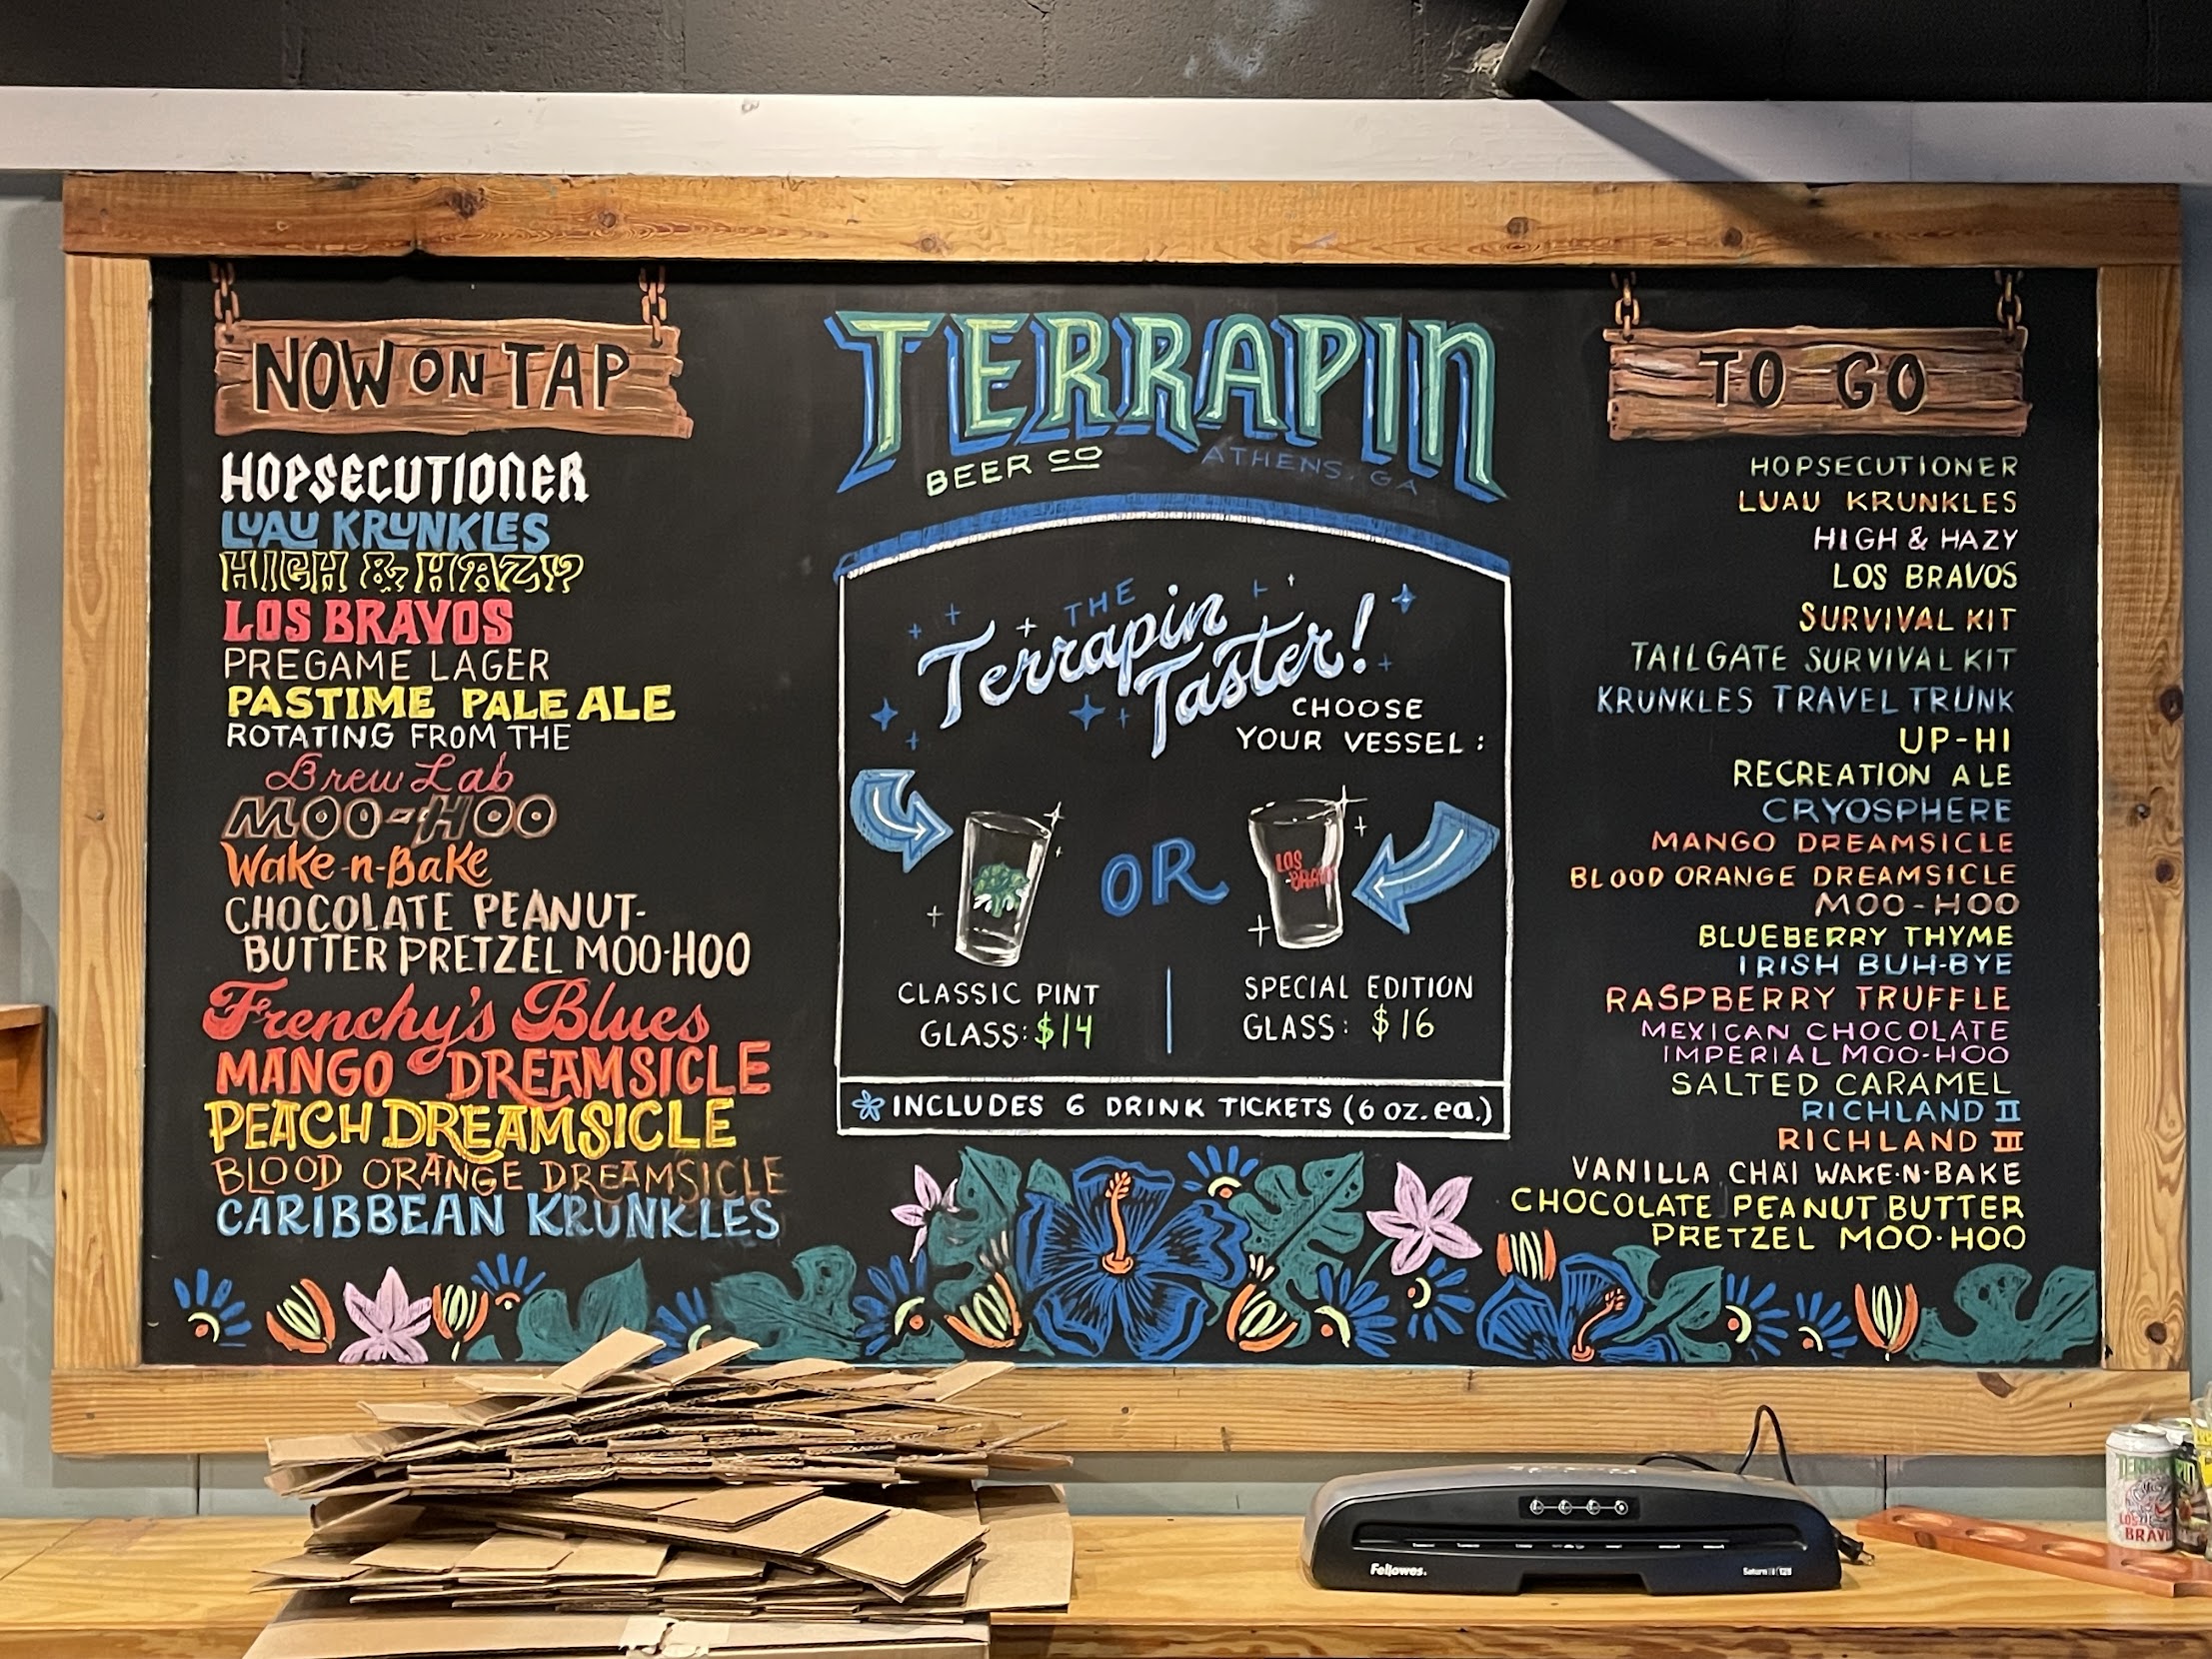 Terrapin Beer Company menu